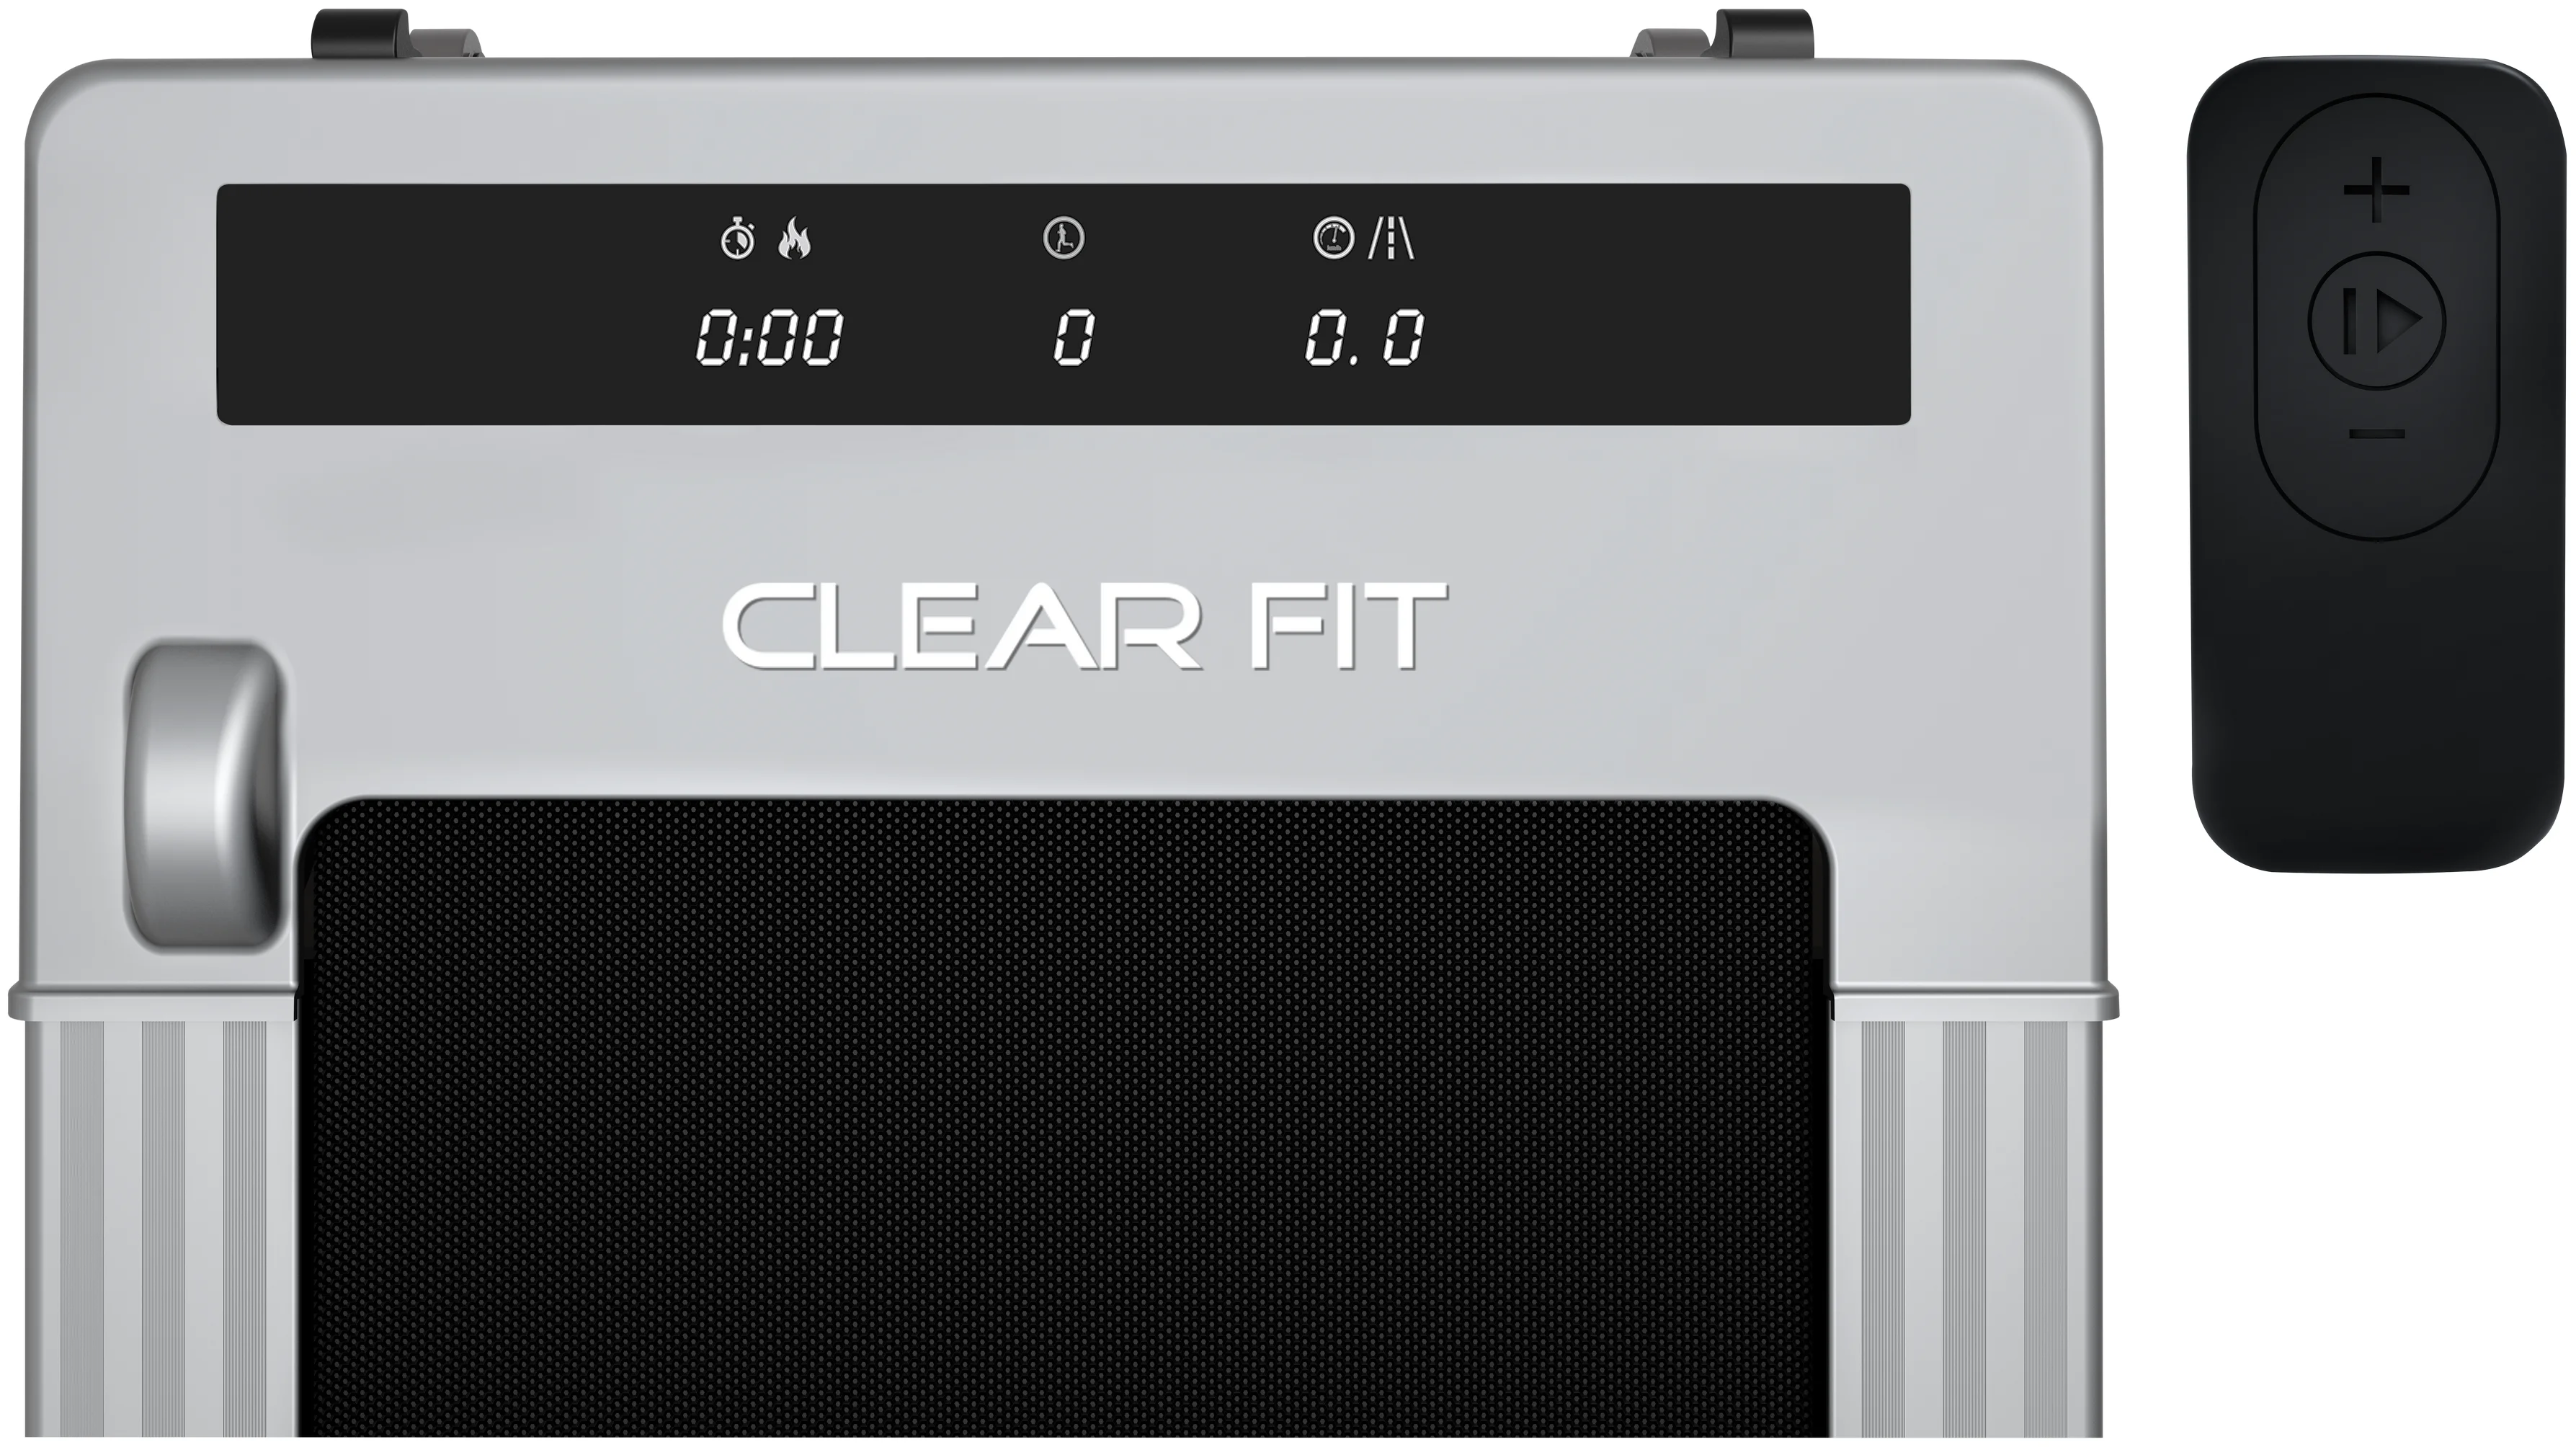 Clear Fit IT 1000 - скорость движения полотна от 0.8 до 6 км/ч